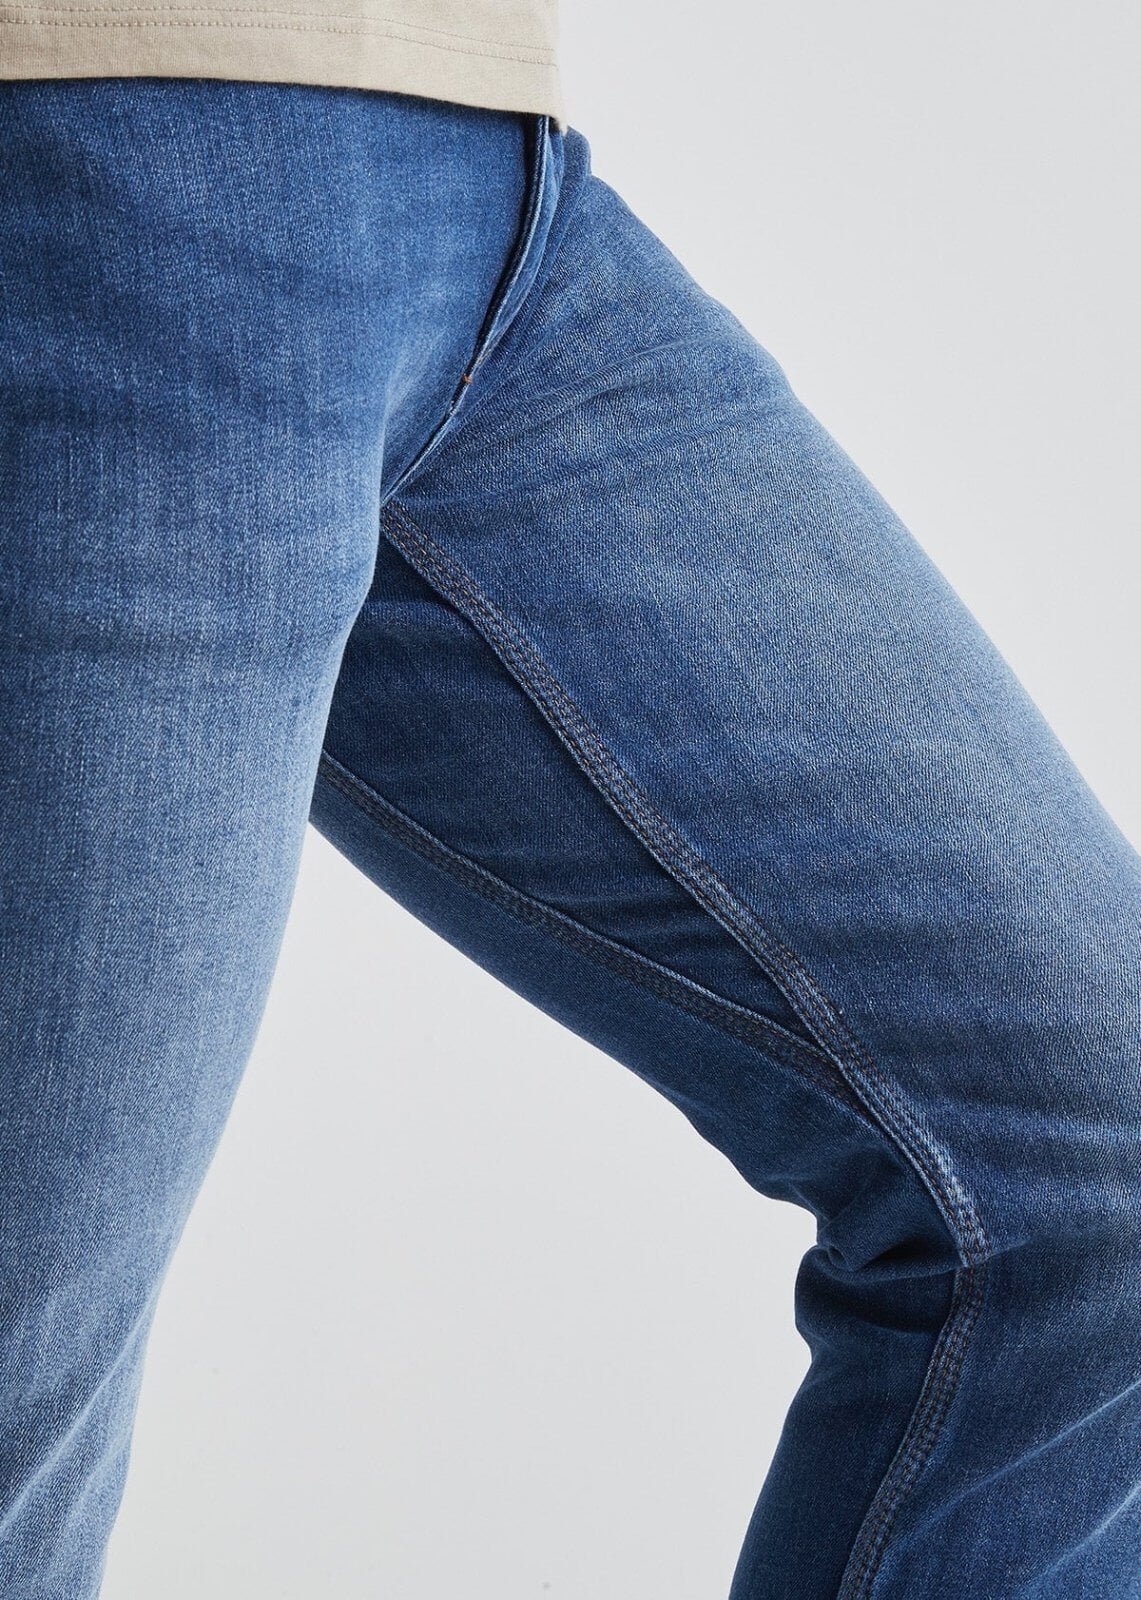 Story High Waist Super Stretch Jeans - Medium Wash